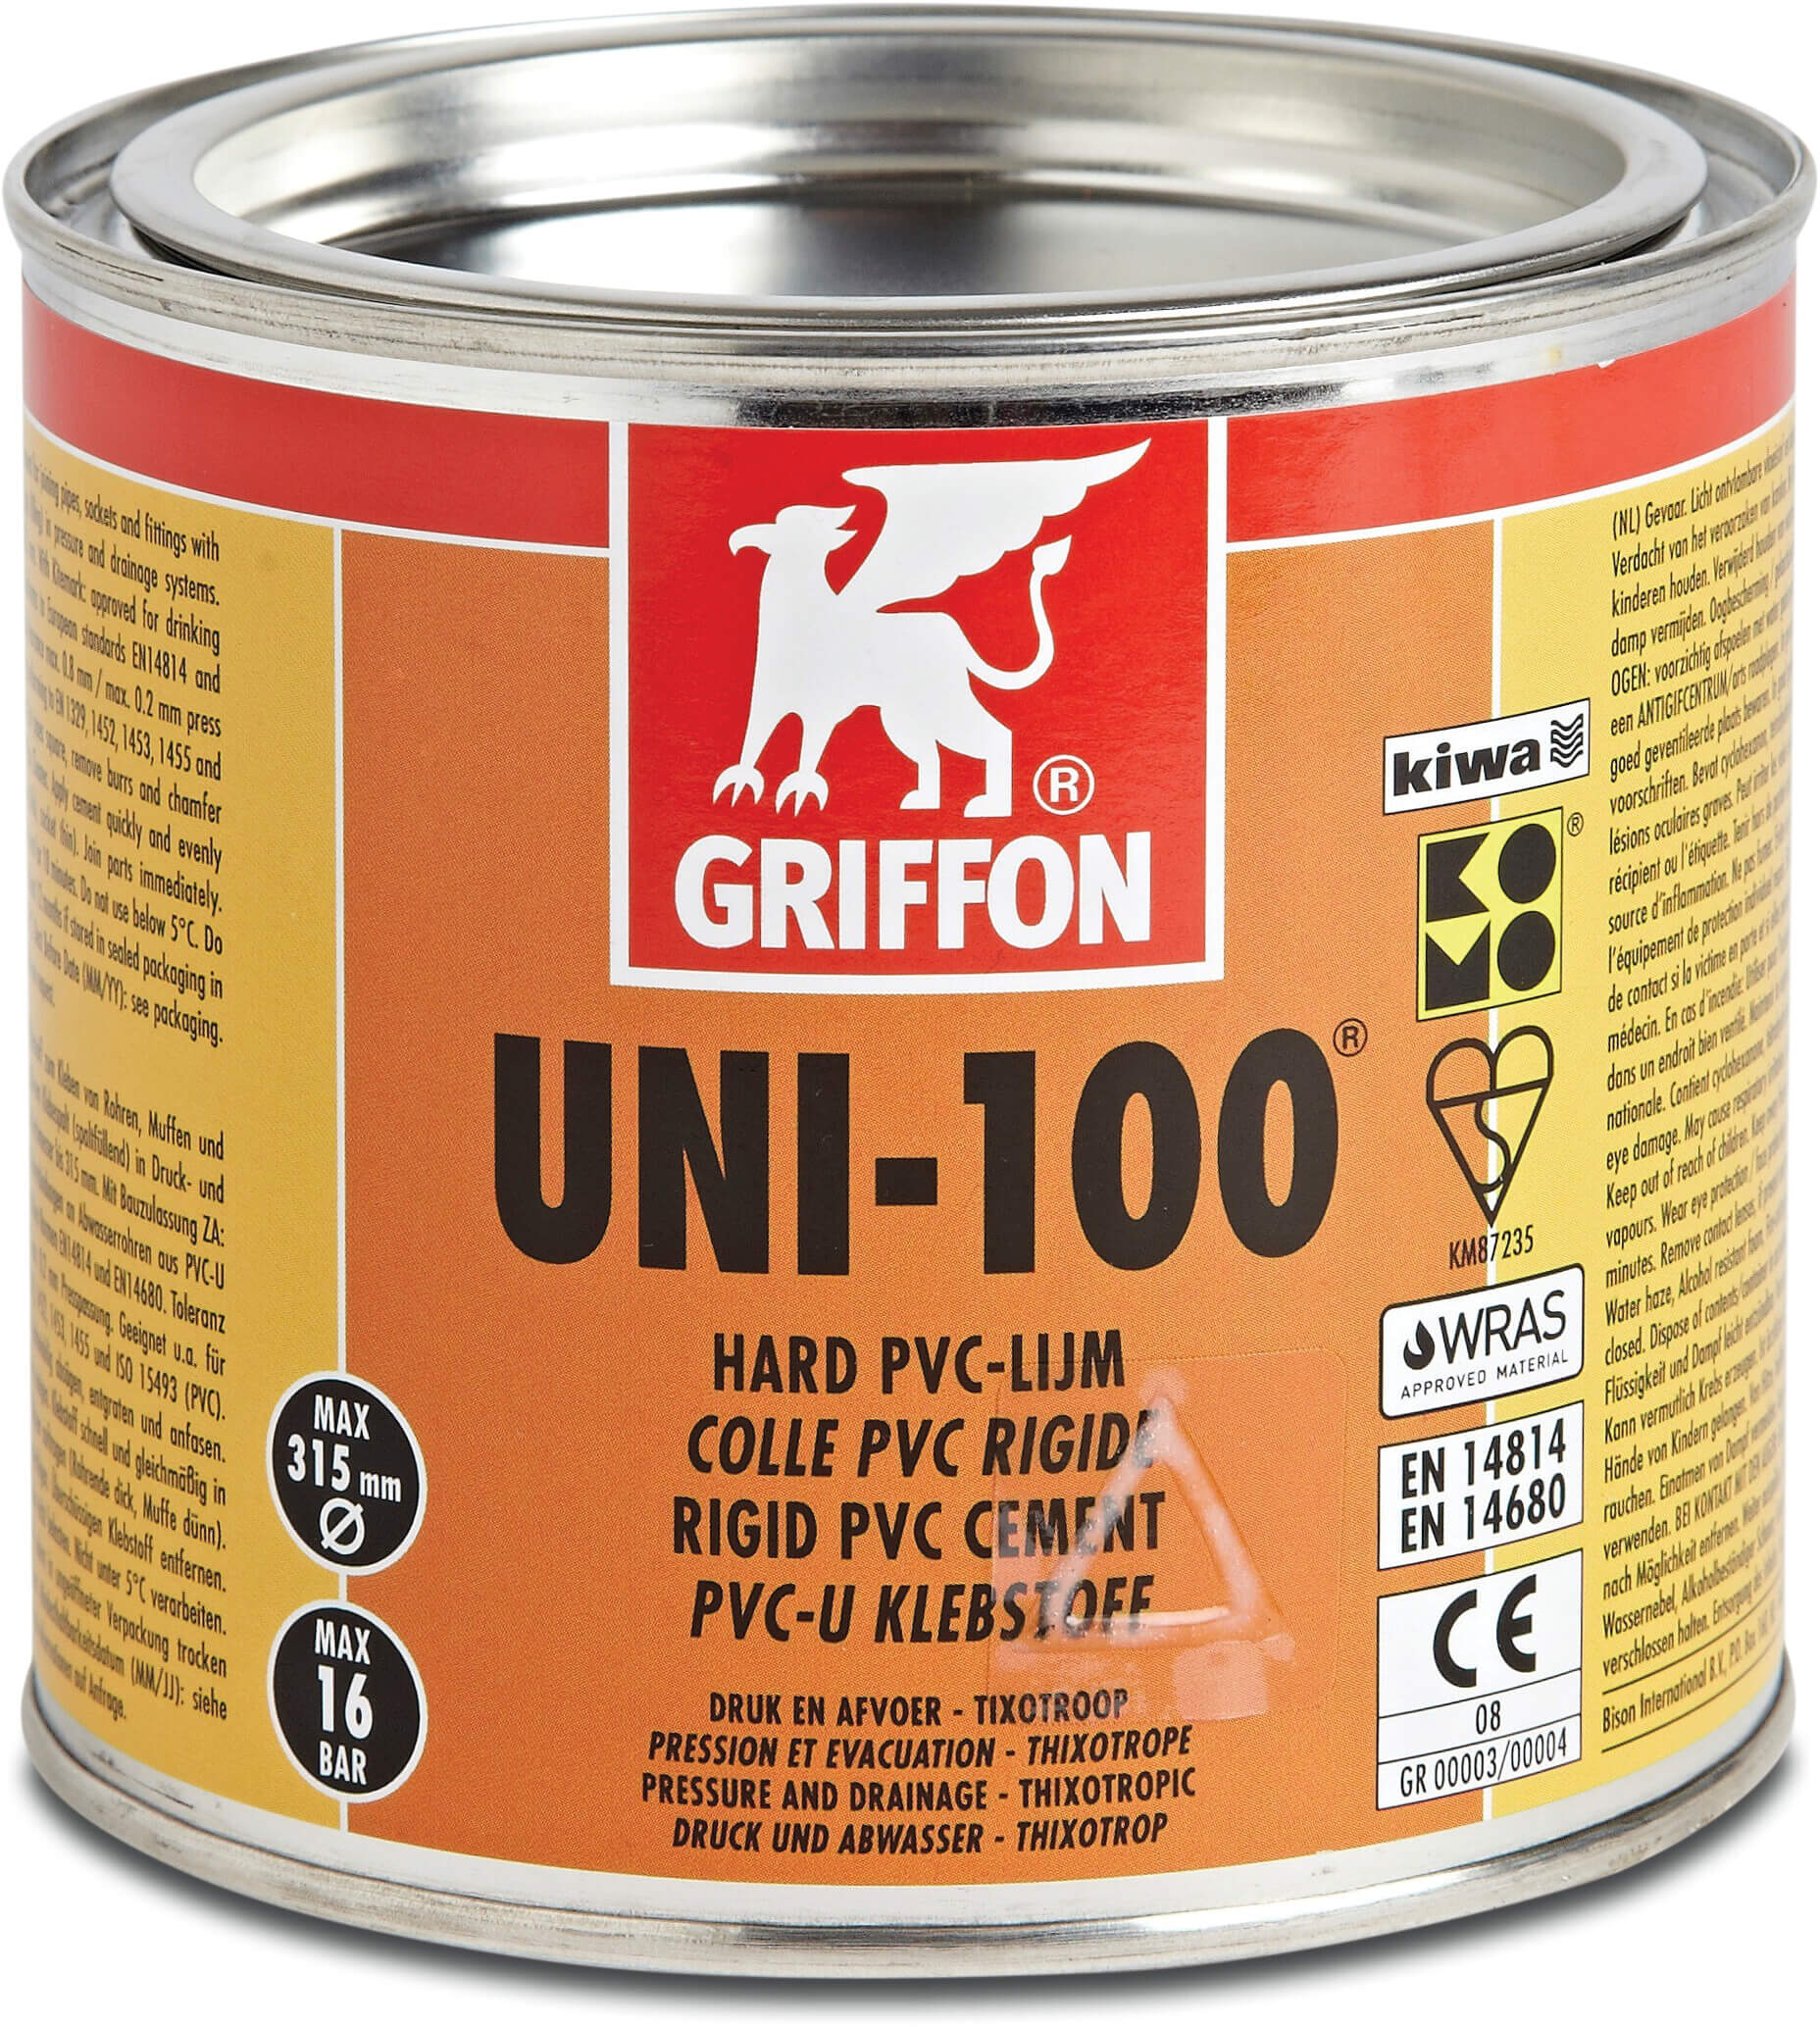 Griffon PVC glue 0,5ltr with steel lid KIWA/WRAS type Uni-100 label EN/DE/NL/FR